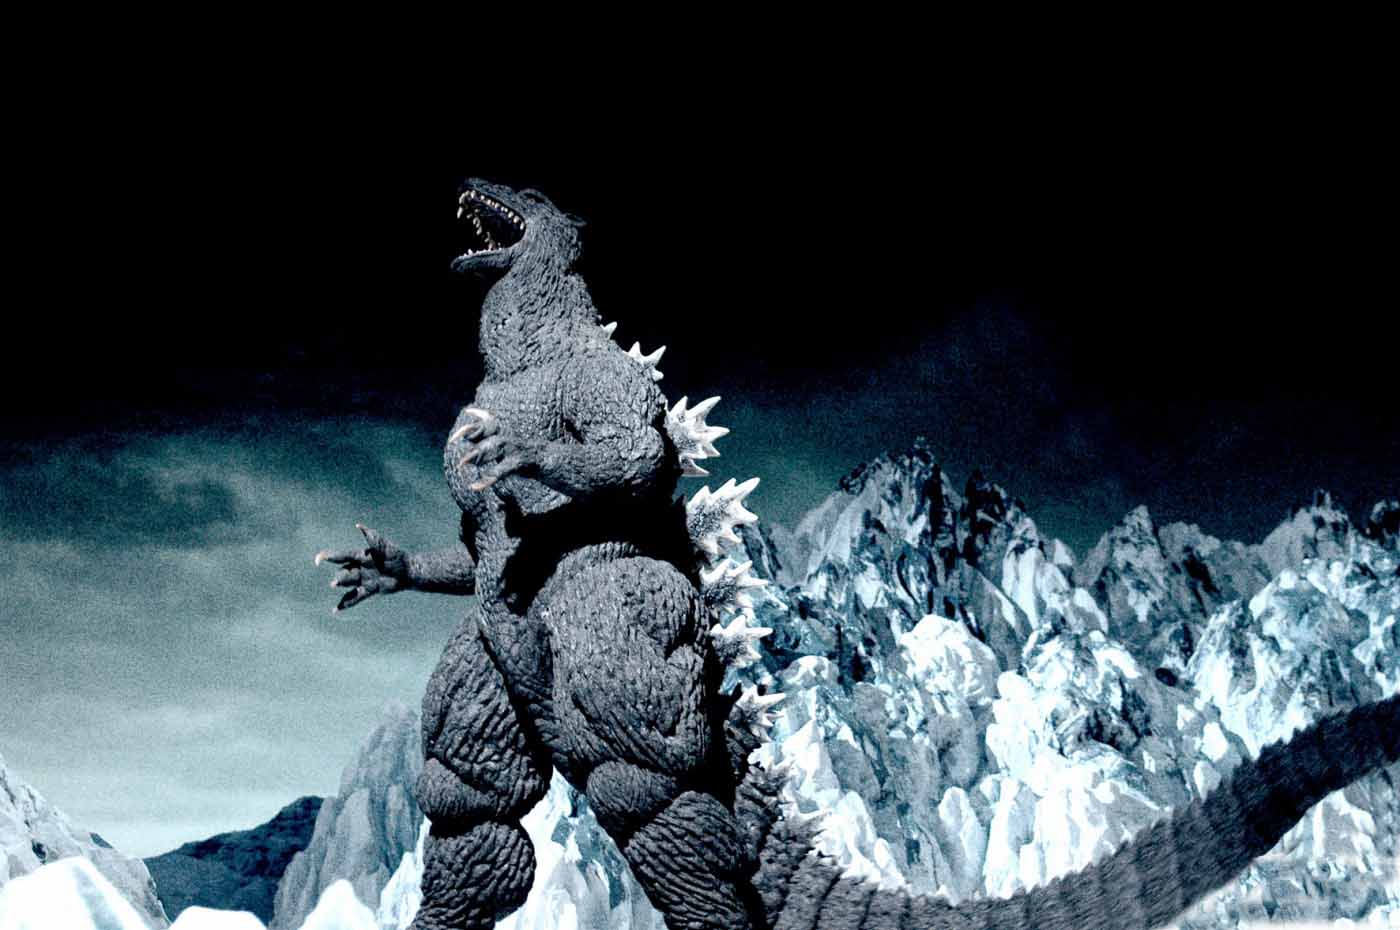 The Godzilla Final Wars